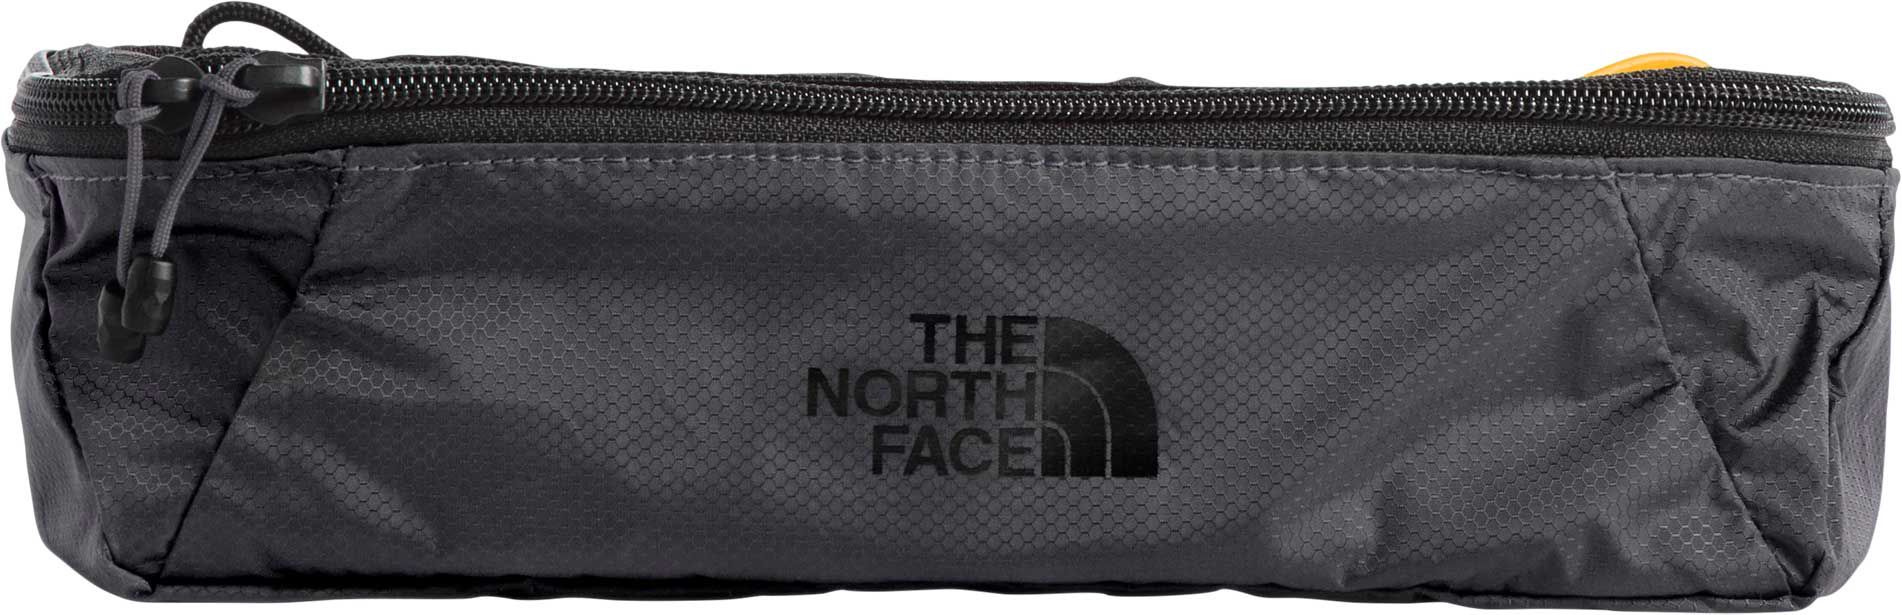 north face cube bag